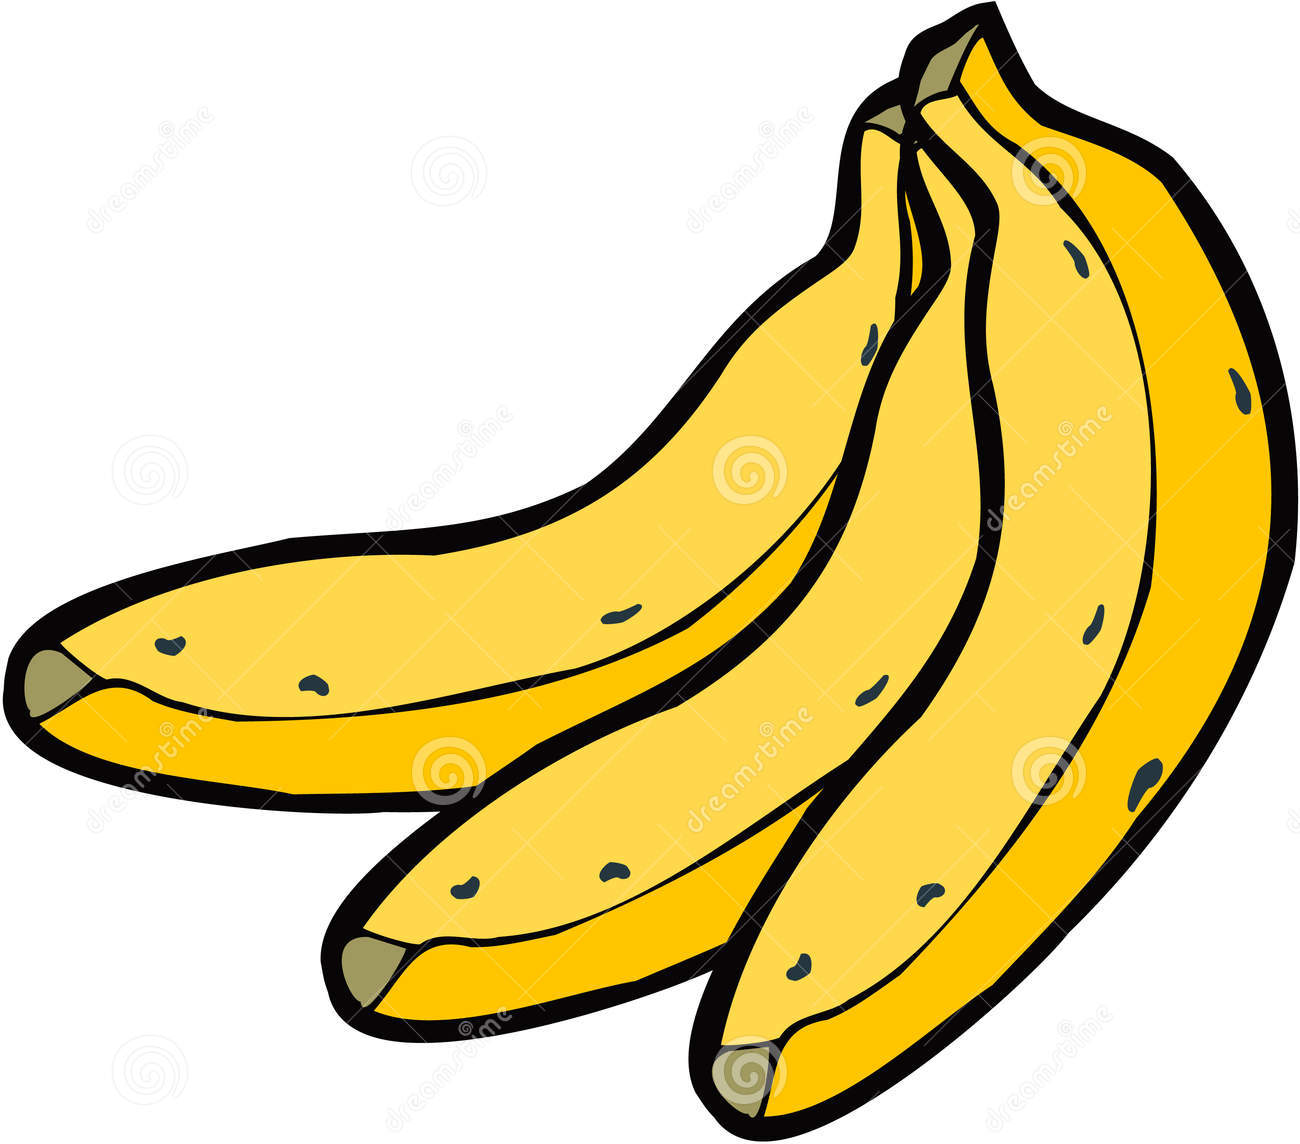 Free Banana Clip Art u0026mid